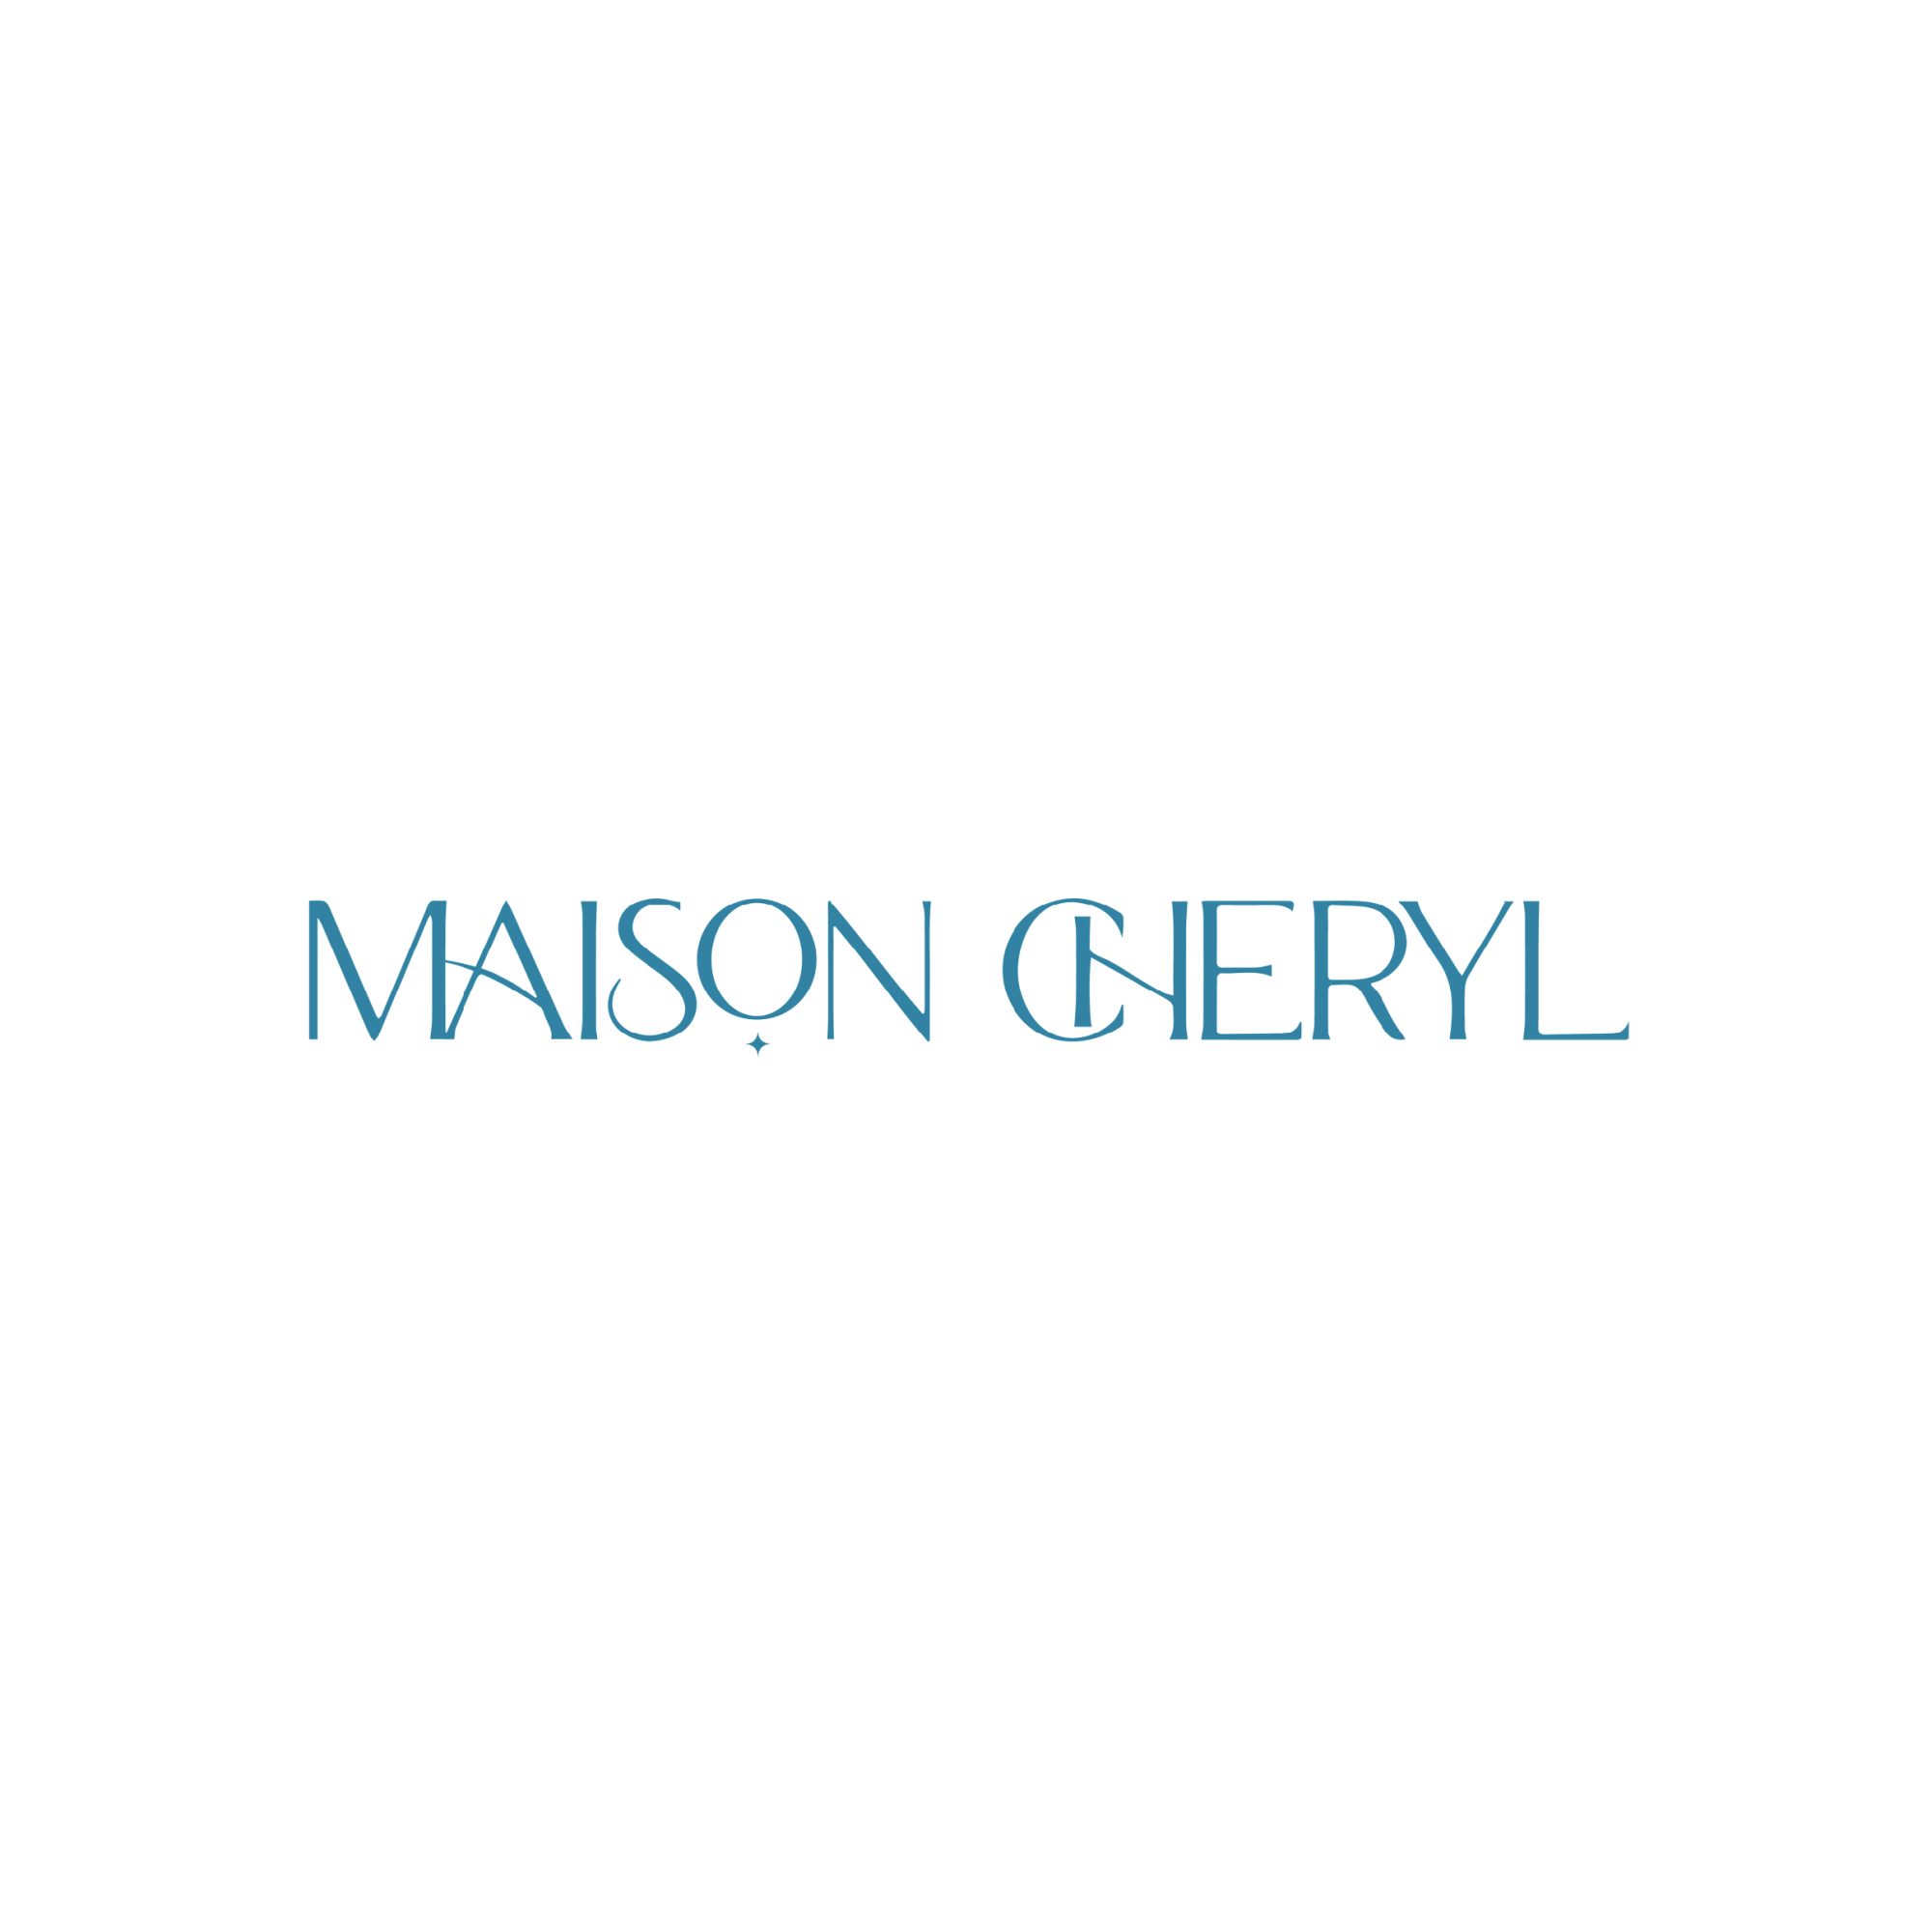 MAISON CHERYL | The Crossing Clarendon